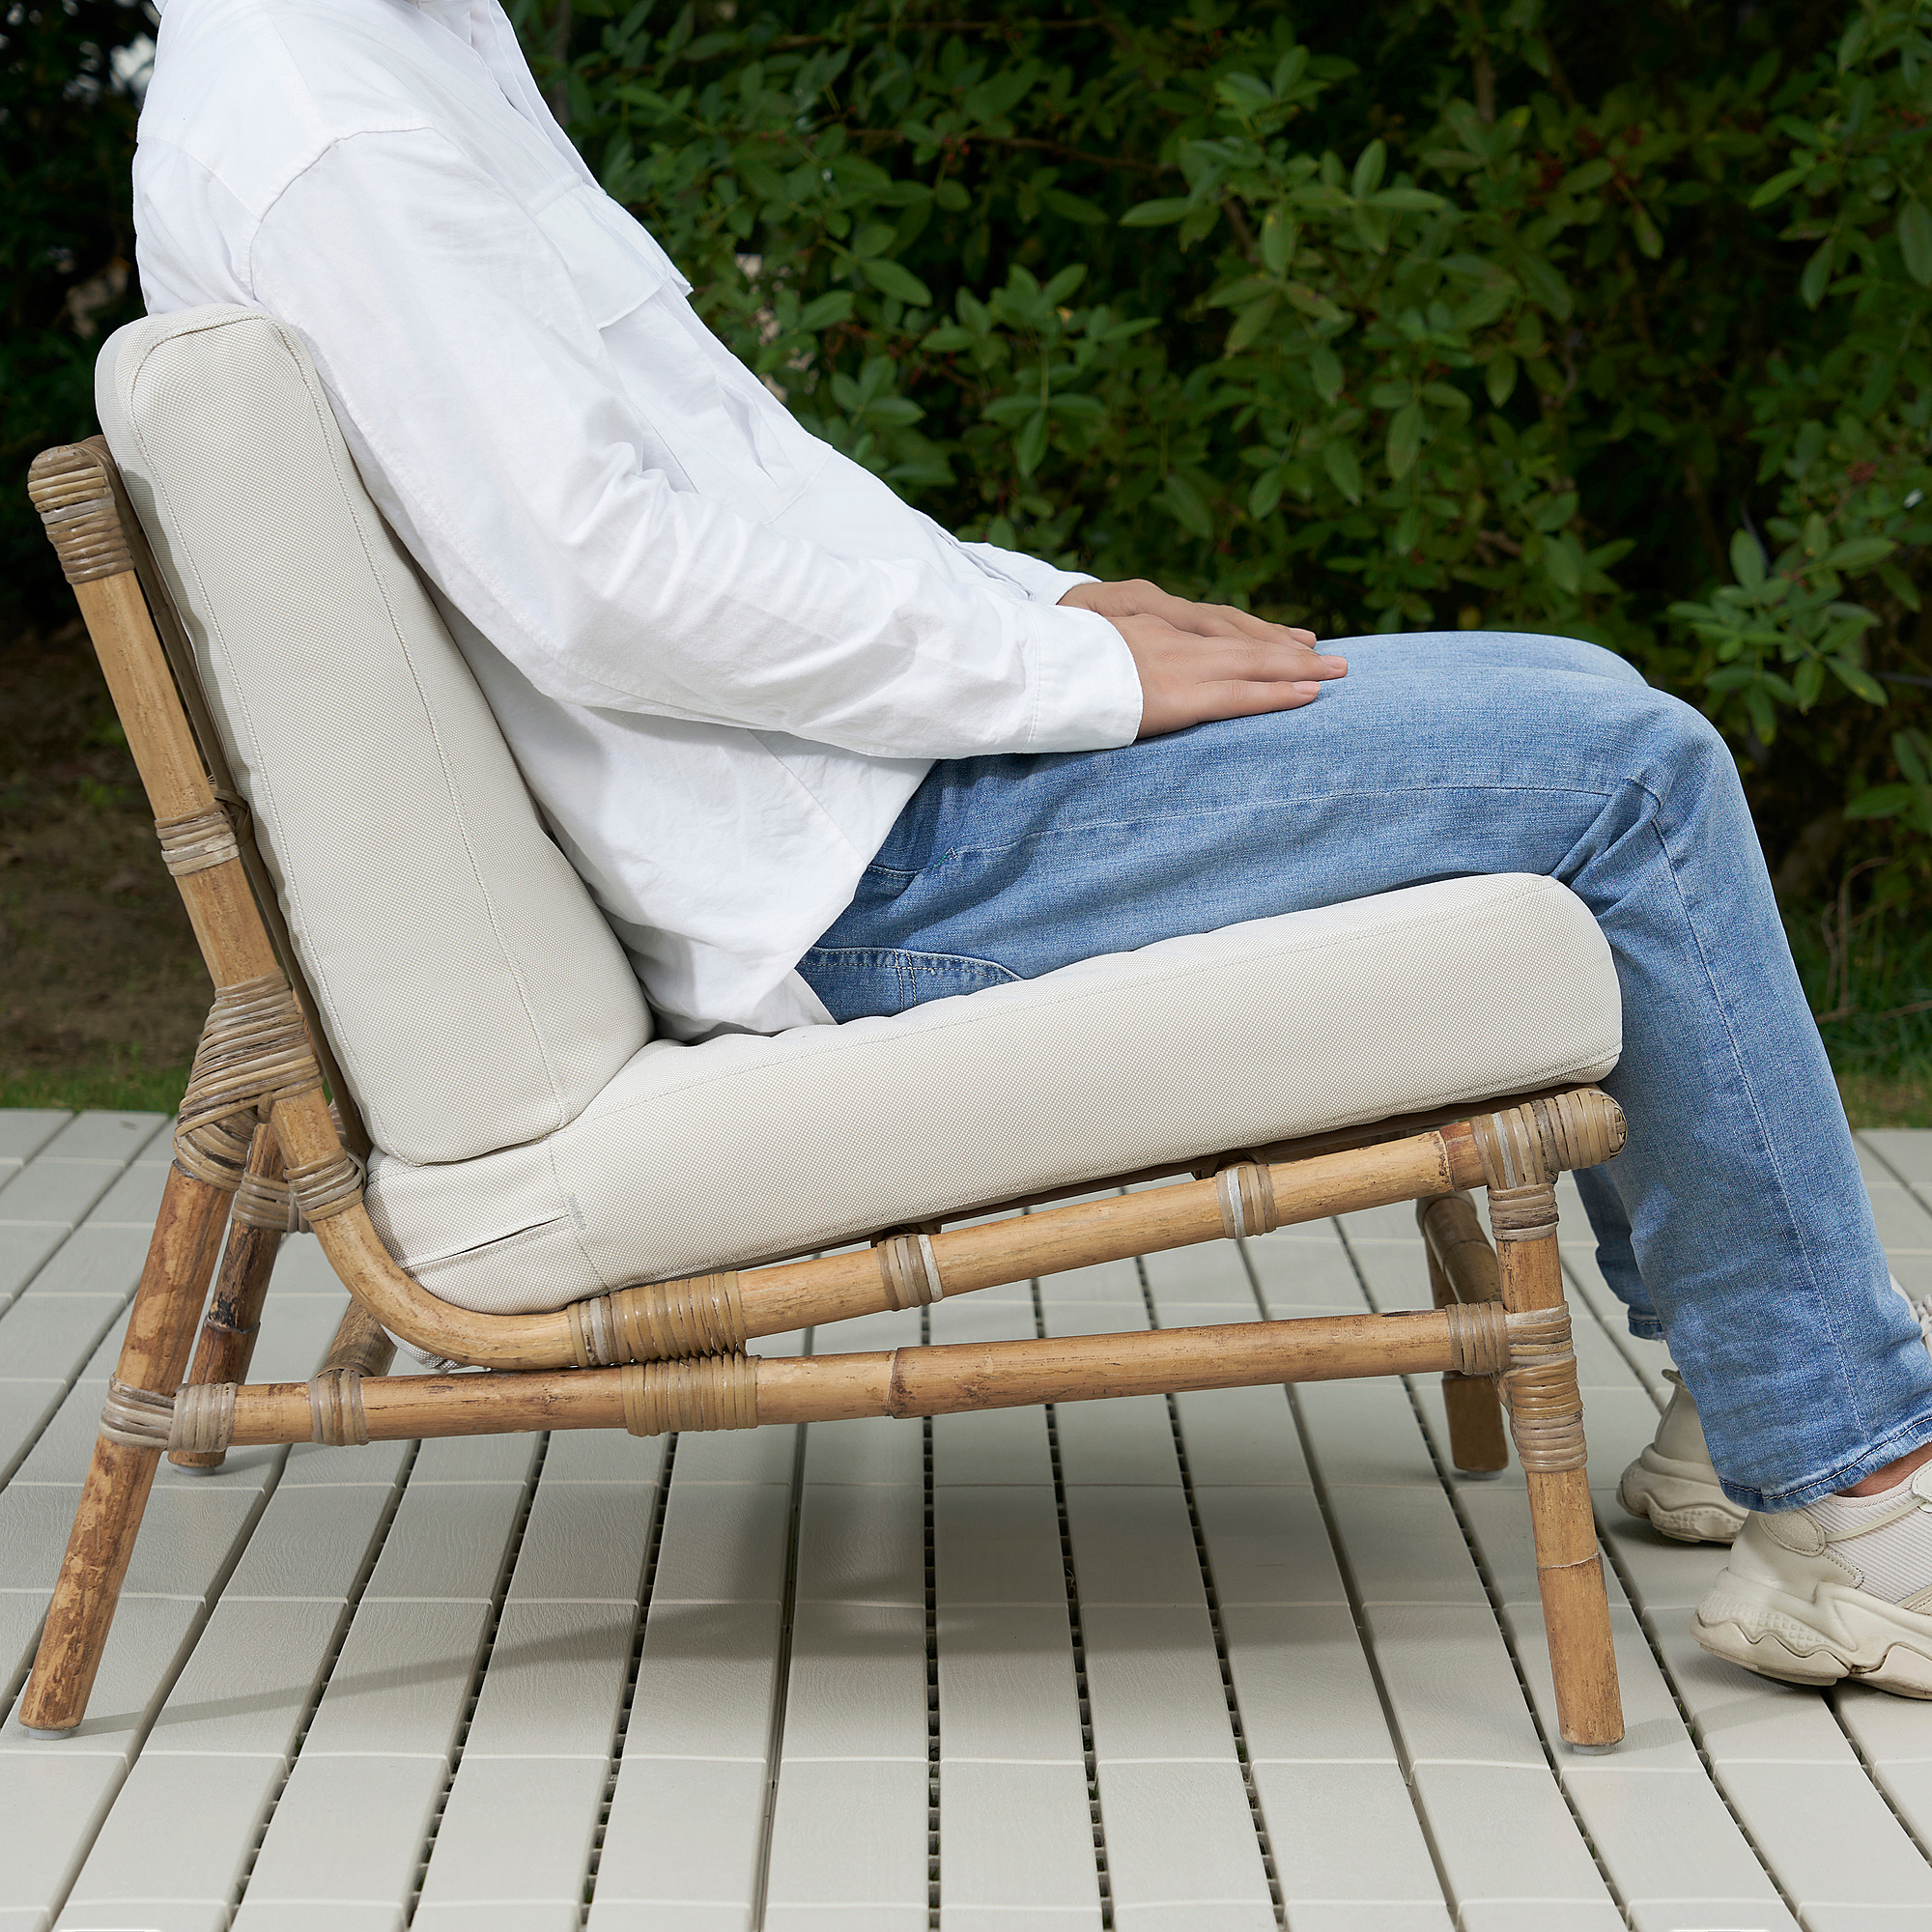 TVARÖ seat sec for modular sofa, outdoor